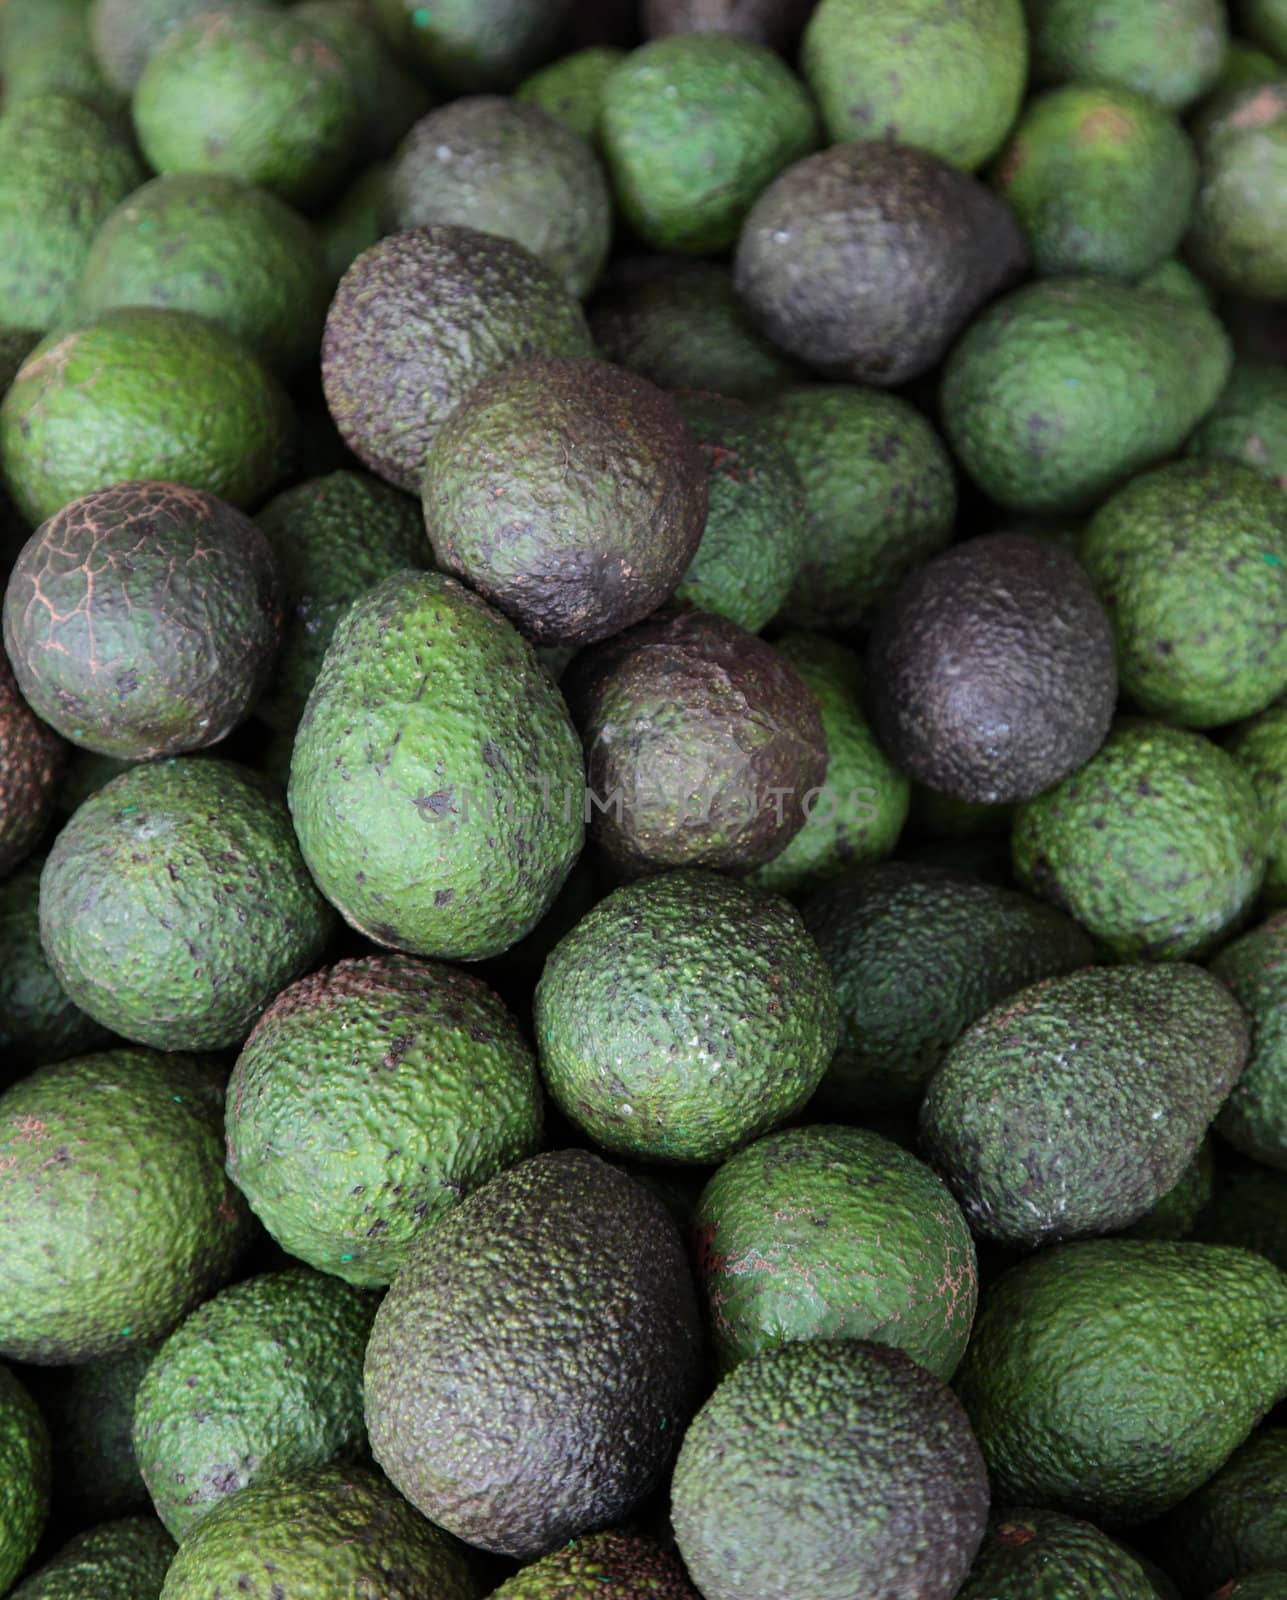 Market stall offering avocados.